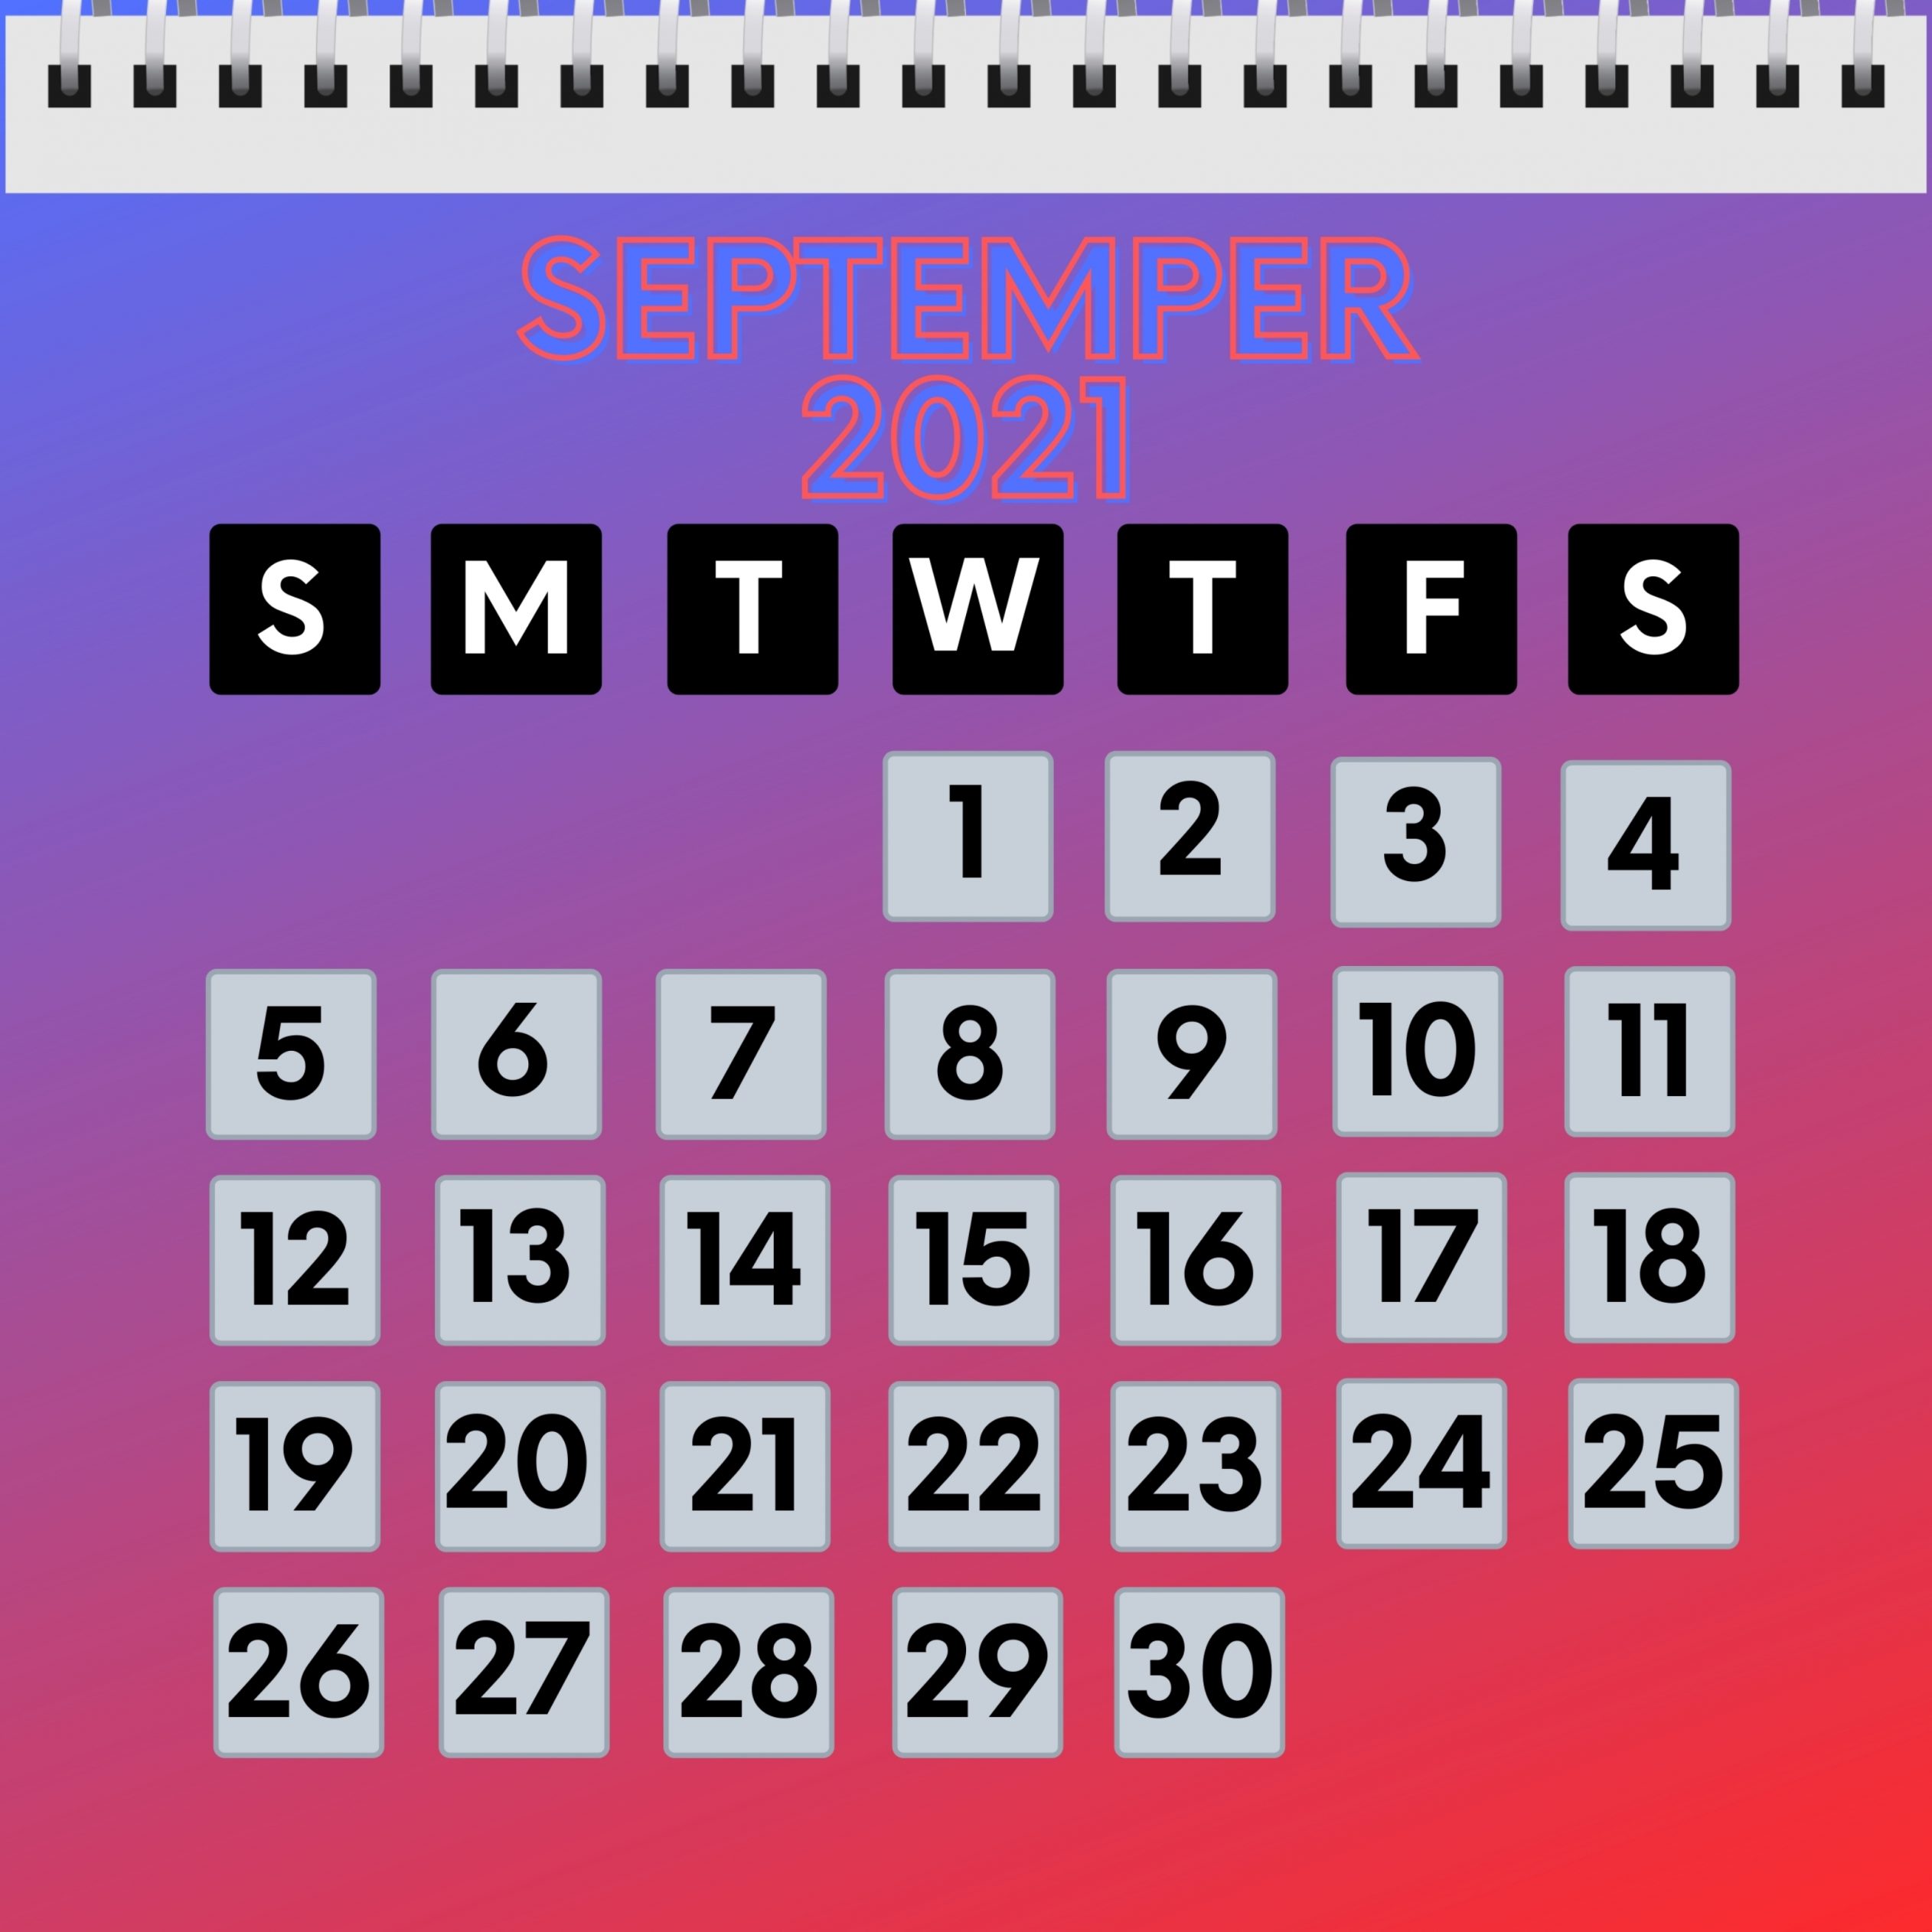 2524x2524 Parallax wallpaper 4k September 2021 Calendar iPad Wallpaper 2524x2524 pixels resolution